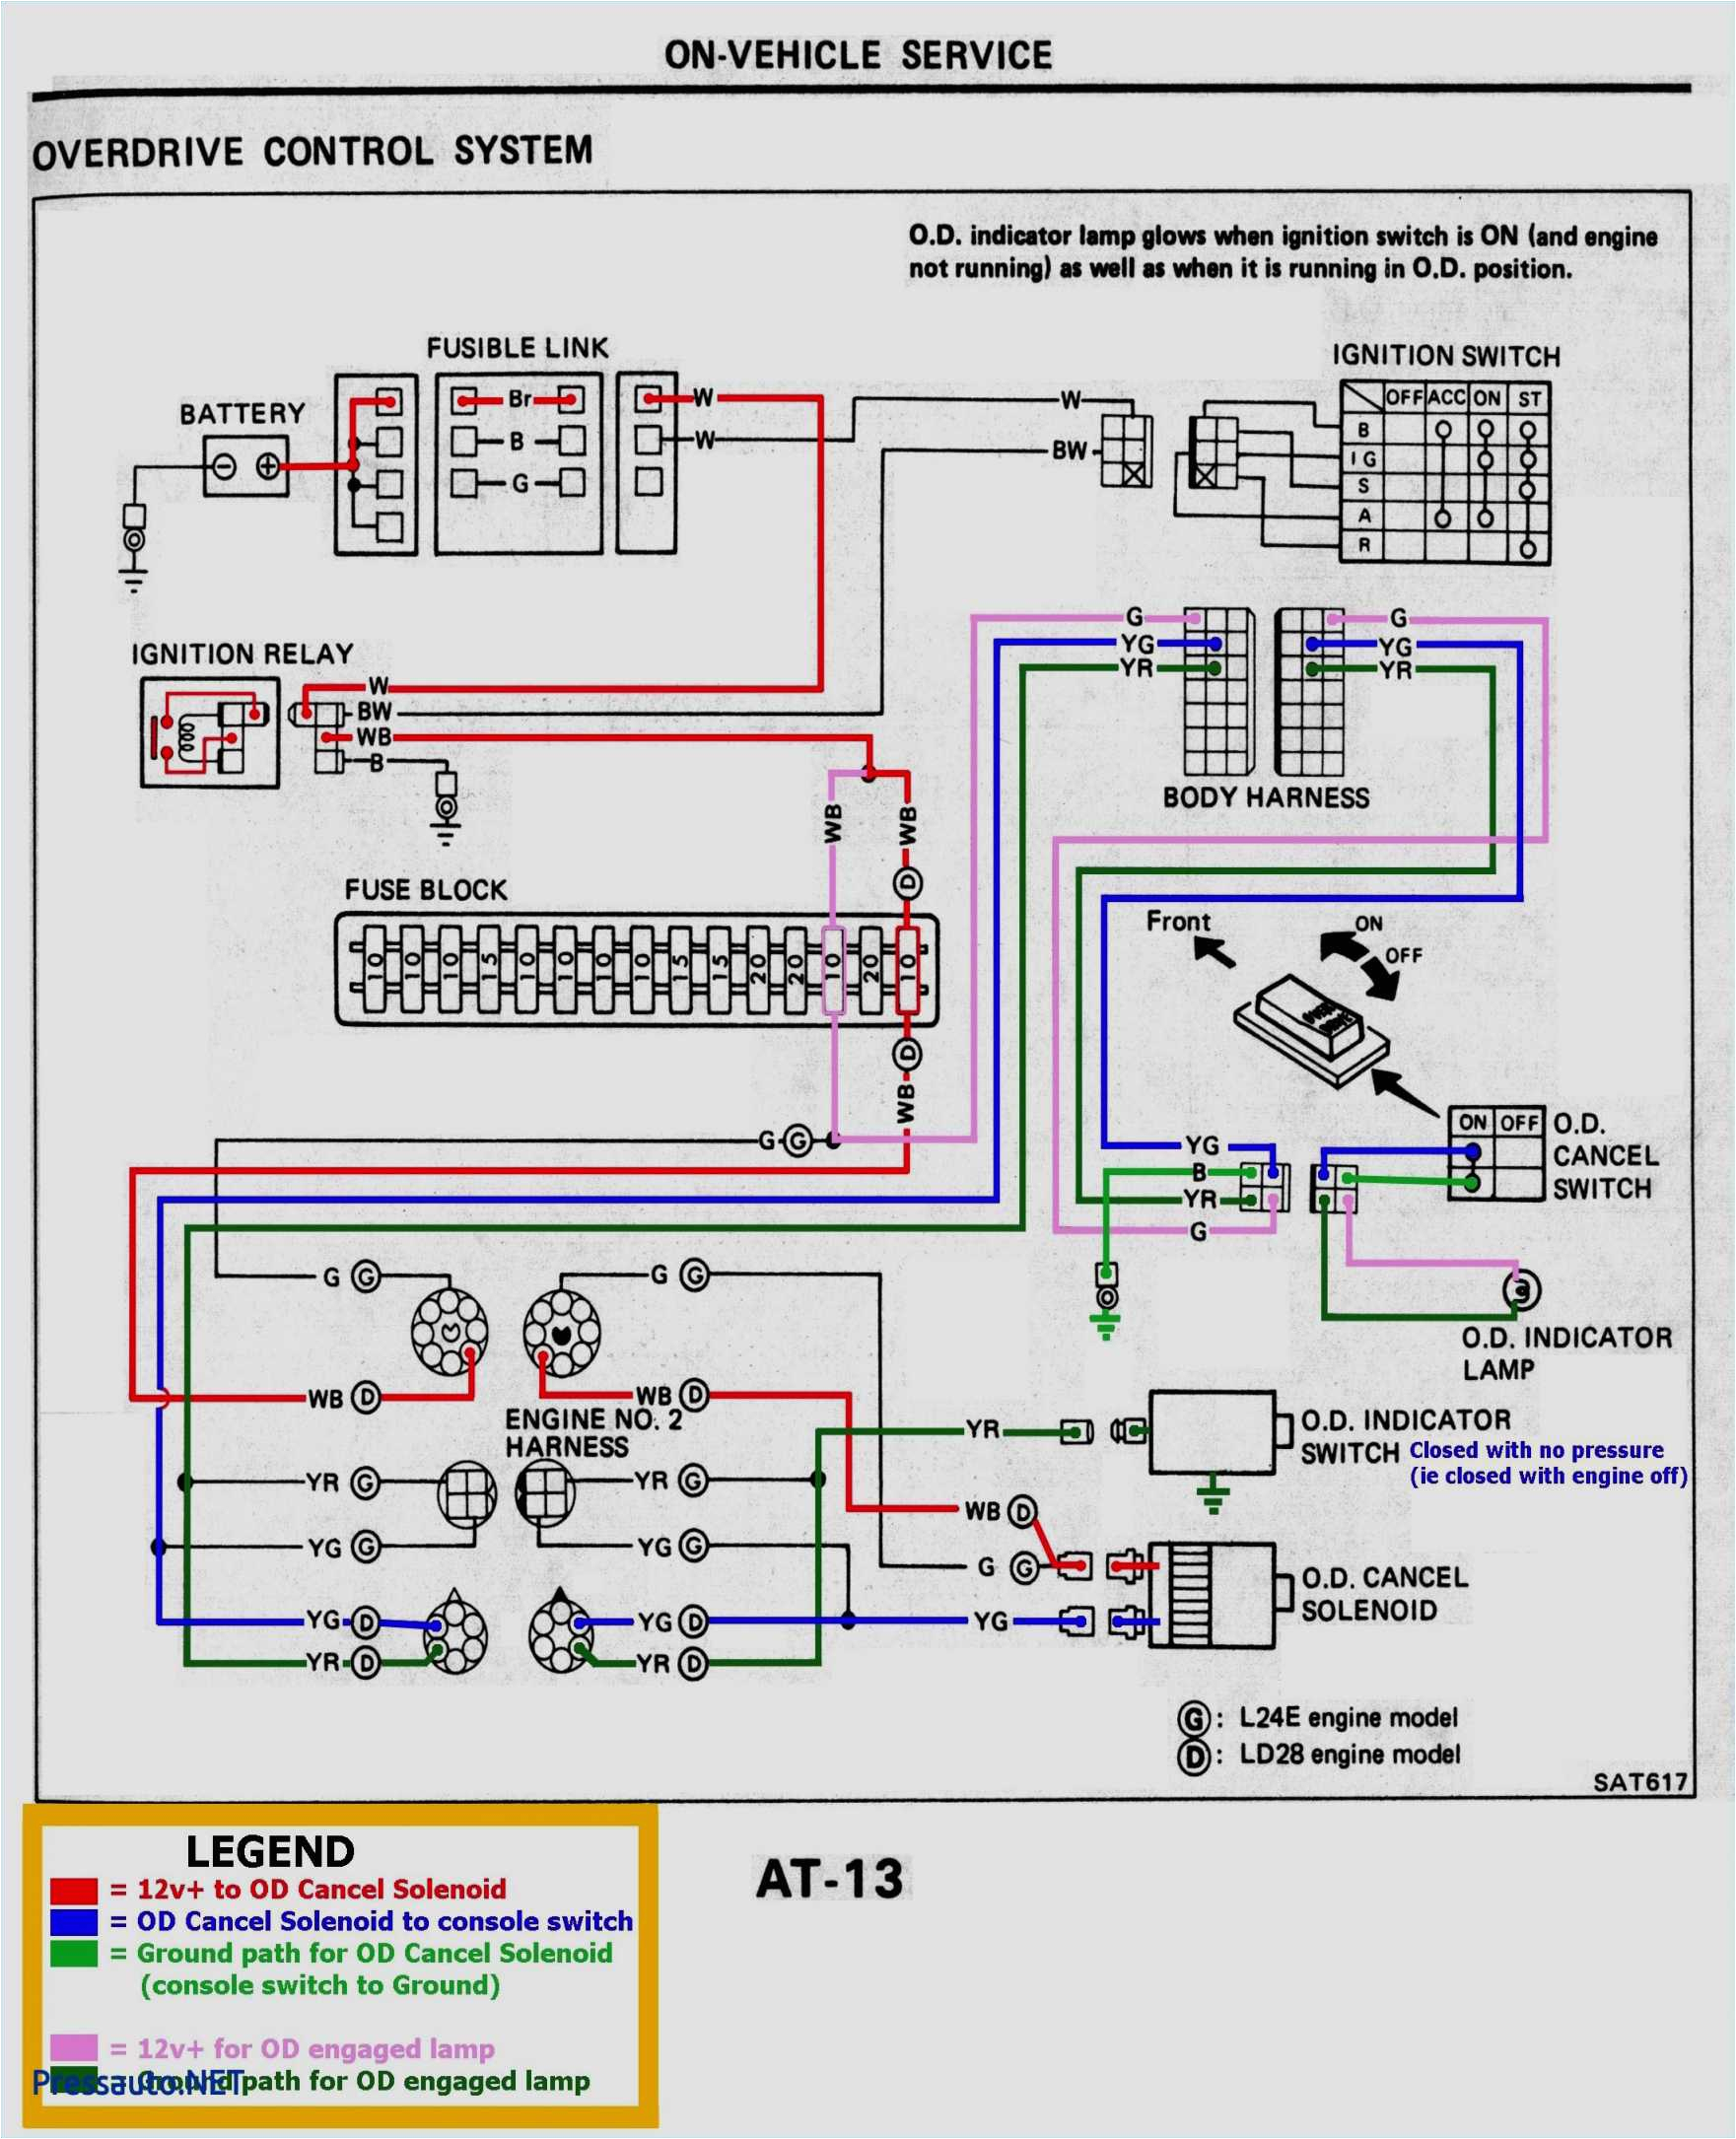 delco diagram wiring 1103076 general wiring diagram data delco diagram wiring 1103076